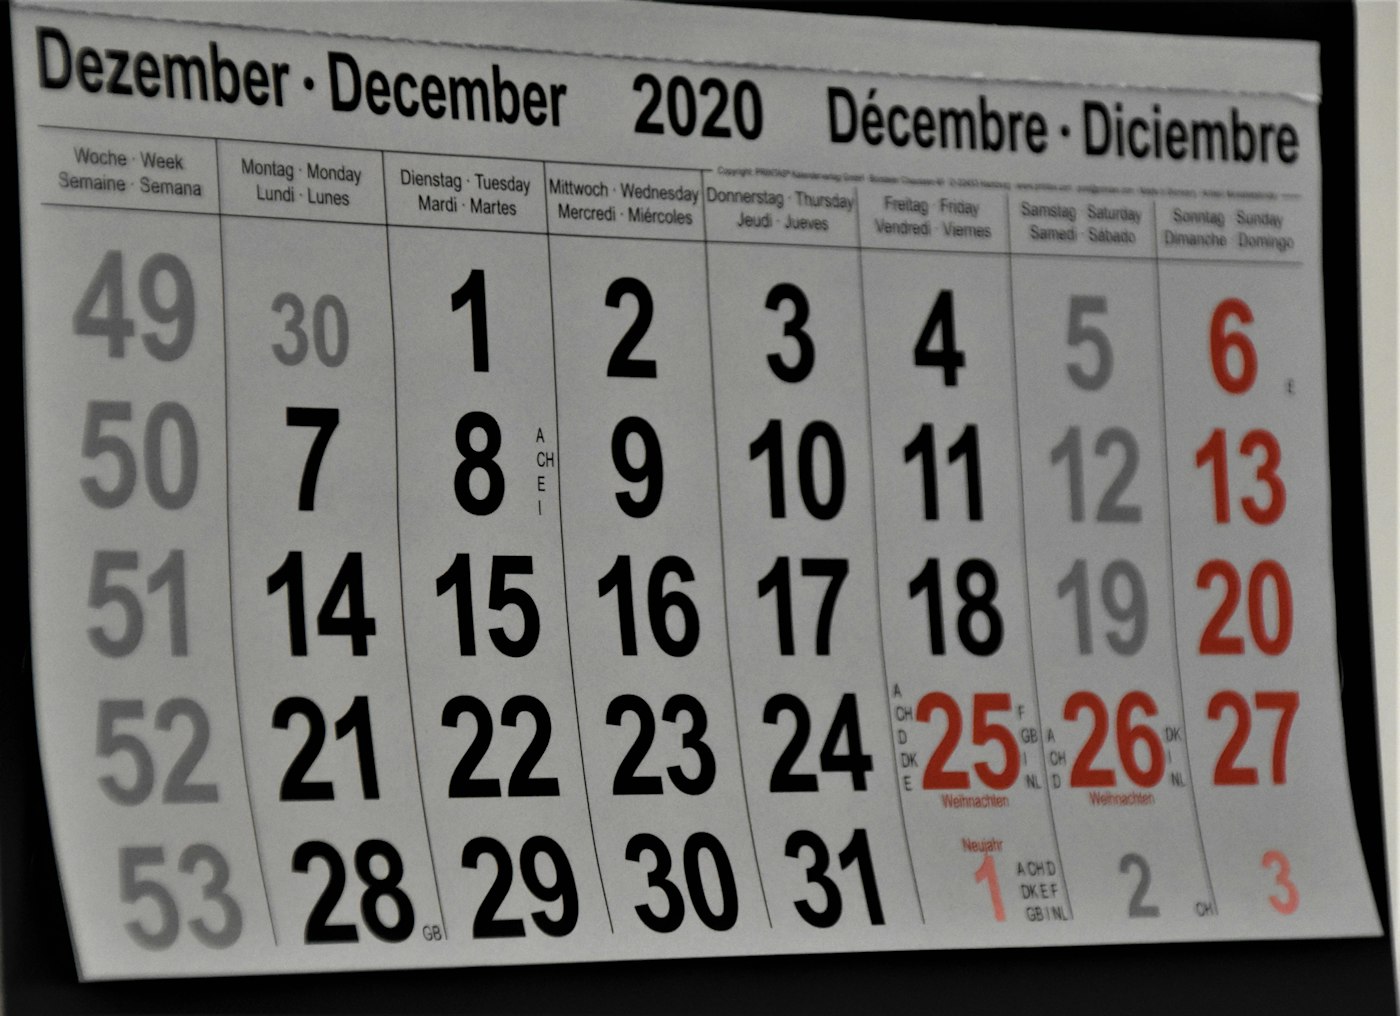 Where the traditional calendar falls short